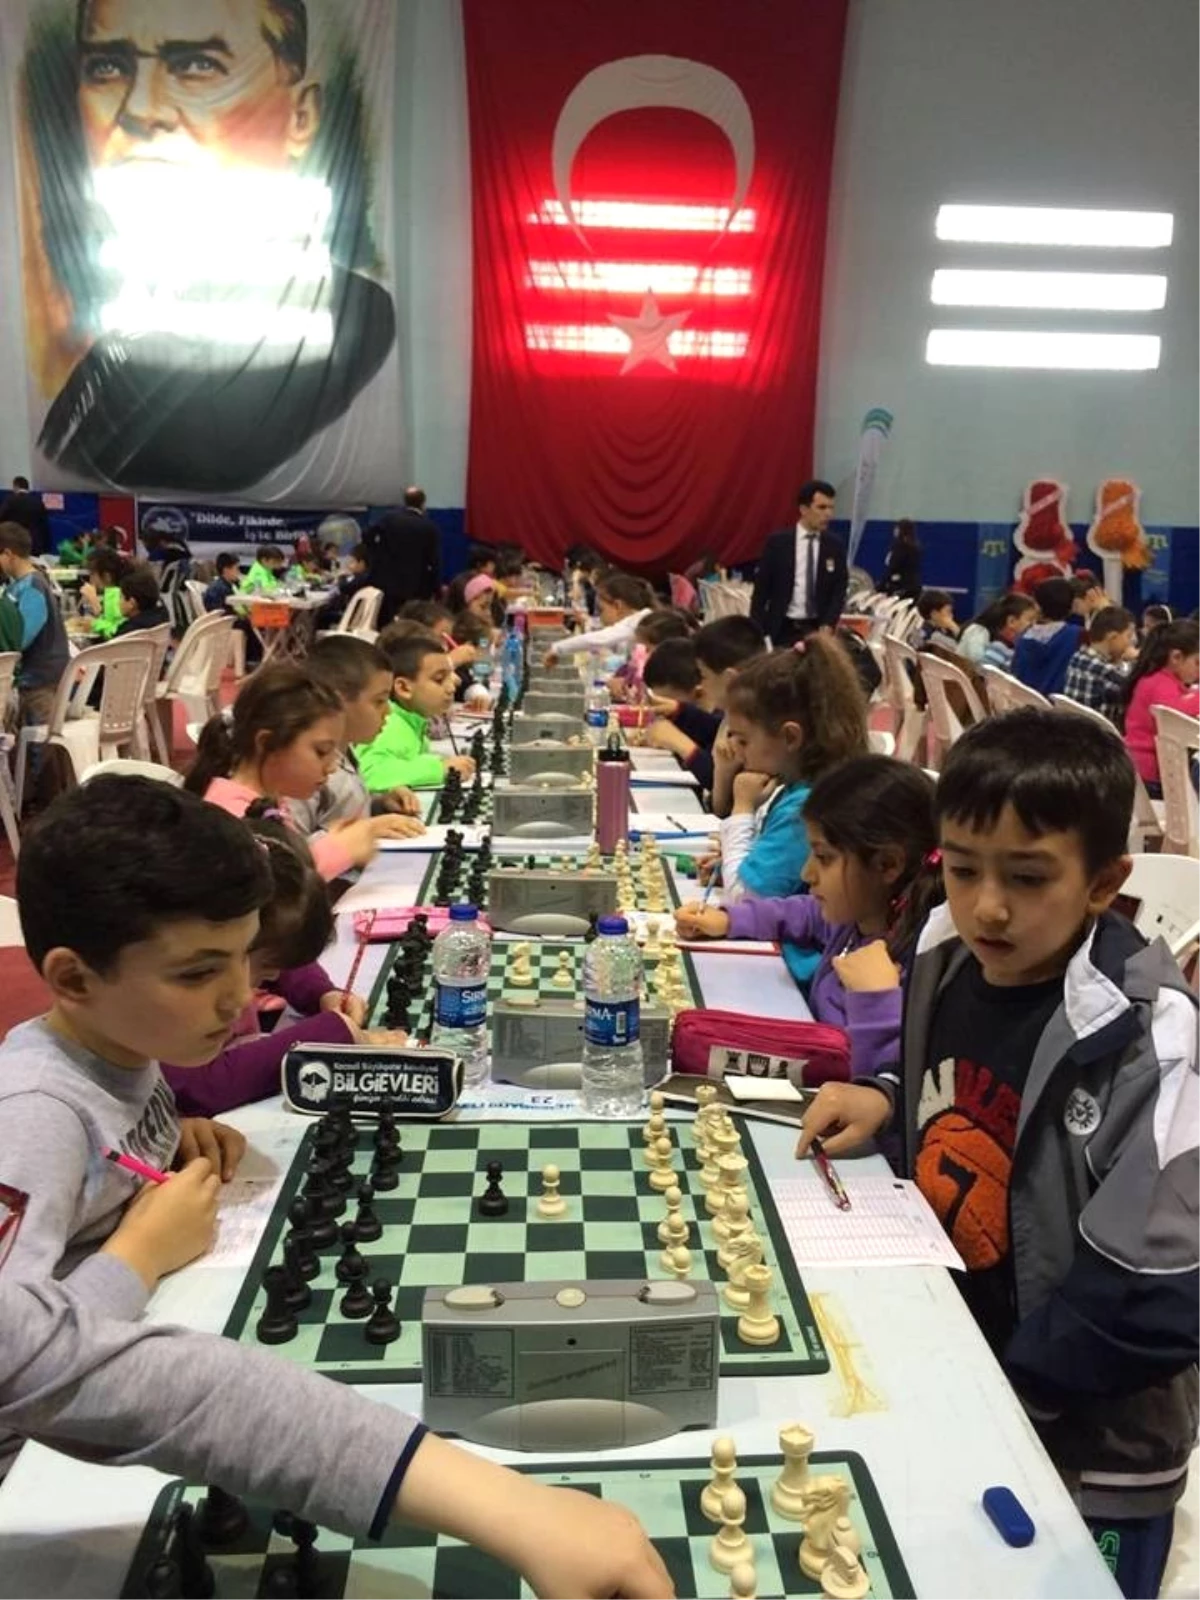 İsmail Bey Gaspıralı Satranç Turnuvası 18-19 Şubat\'ta